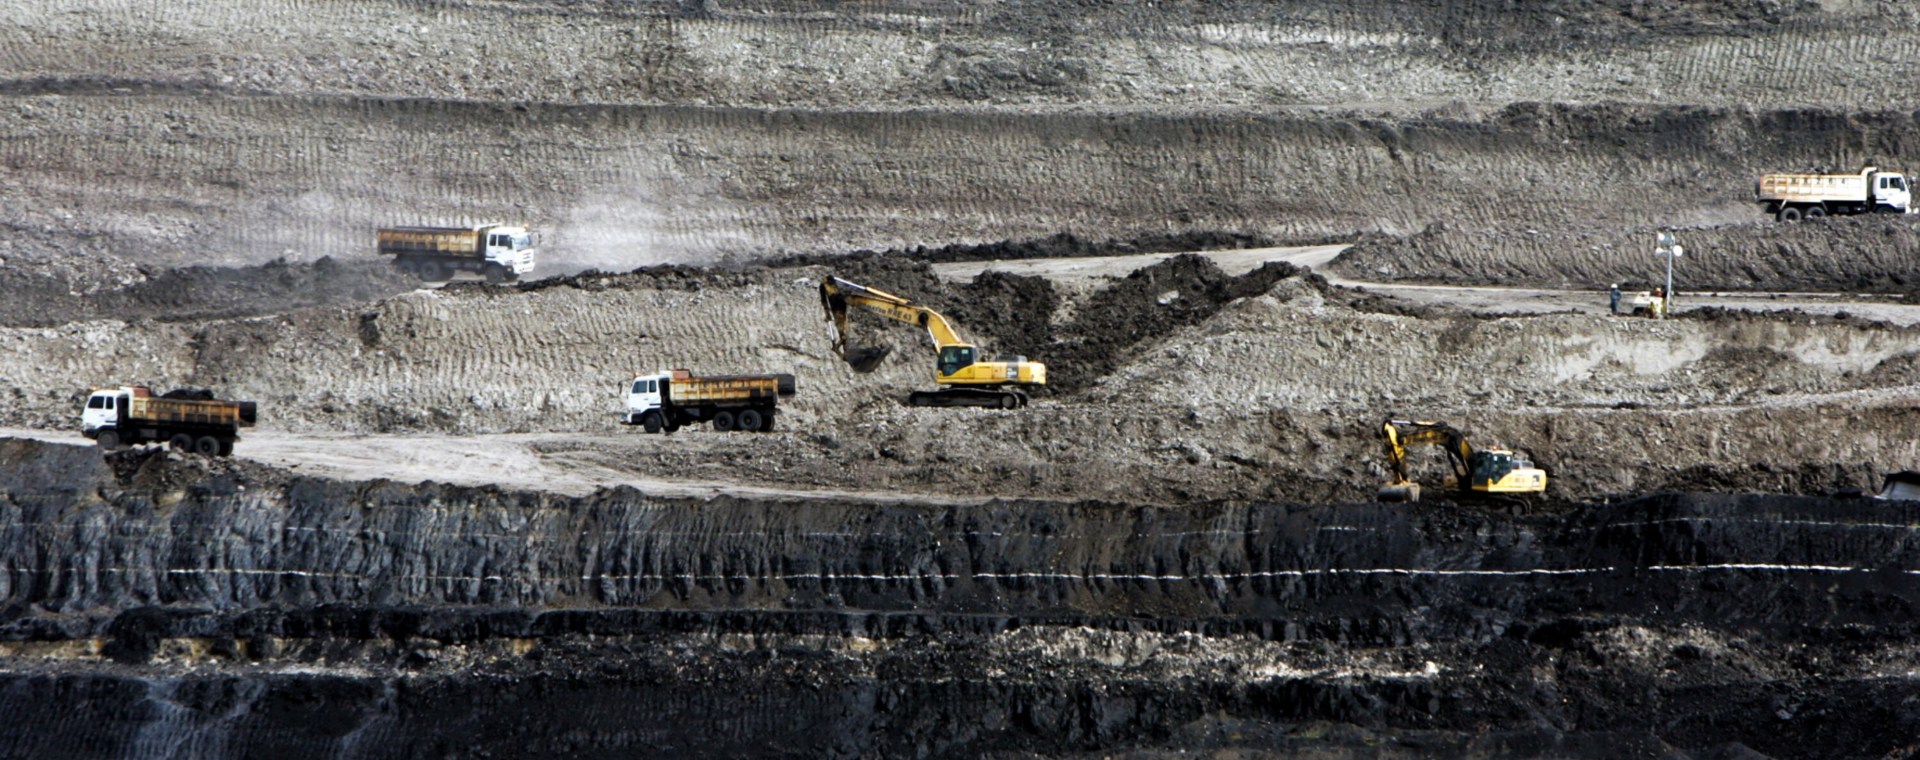 Alat berat beroperasi di tambang batu bara PT Bukit Asam (PTBA) di Tanjung Enim, Sumatera Selatan pada Juli 2011. - Bloomberg/Dadang Tri